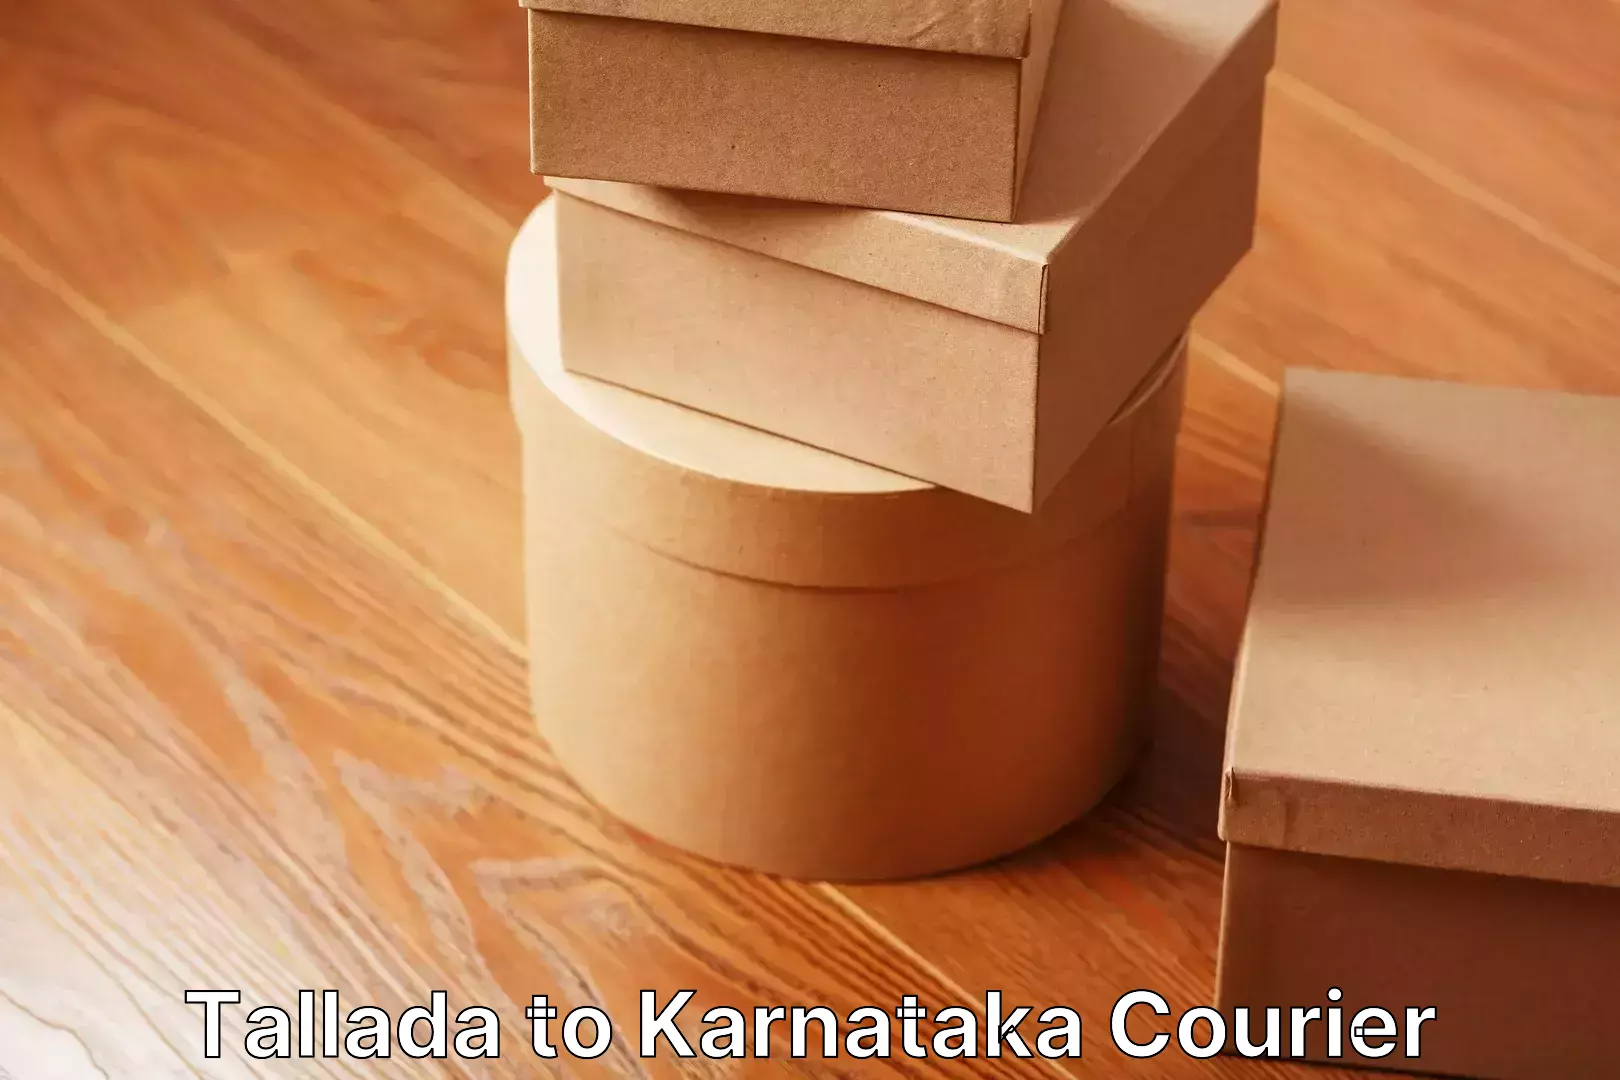 Professional goods transport in Tallada to Karnataka